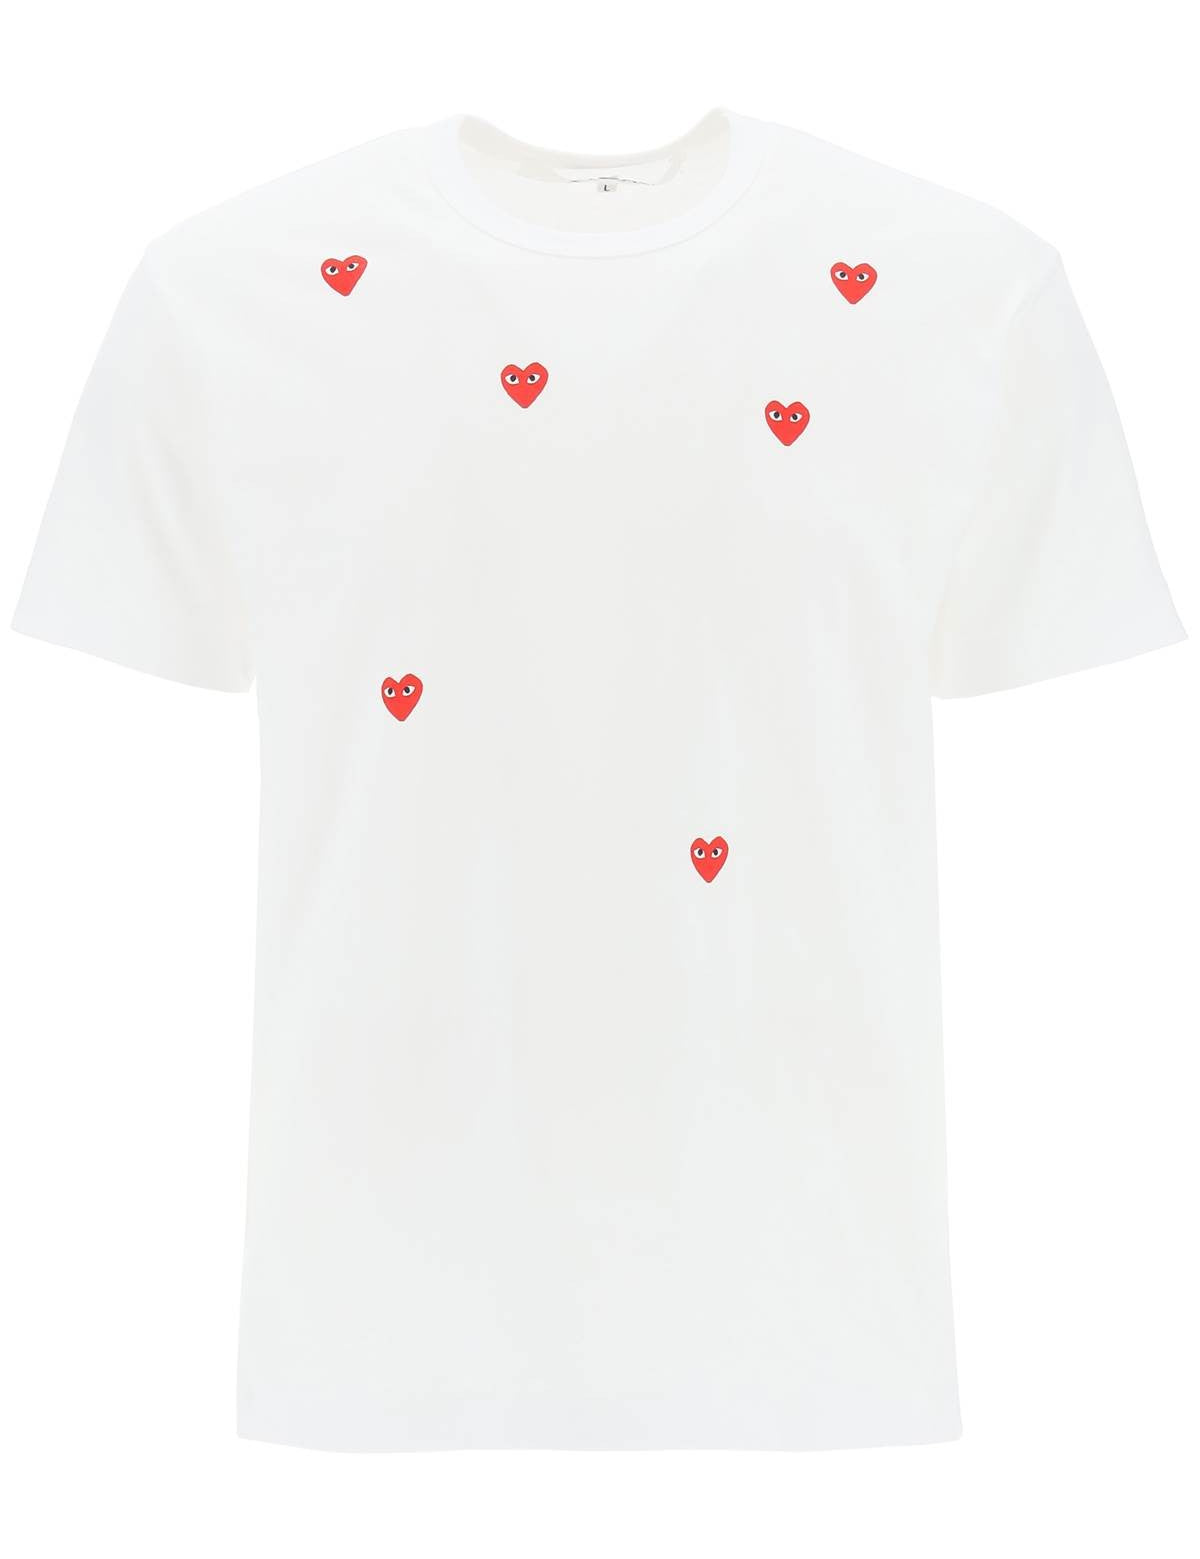 round-neck-t-shirt-with-heart-pattern_d75e6dca-5722-475d-9eae-b4f8ea3ec20d.jpg